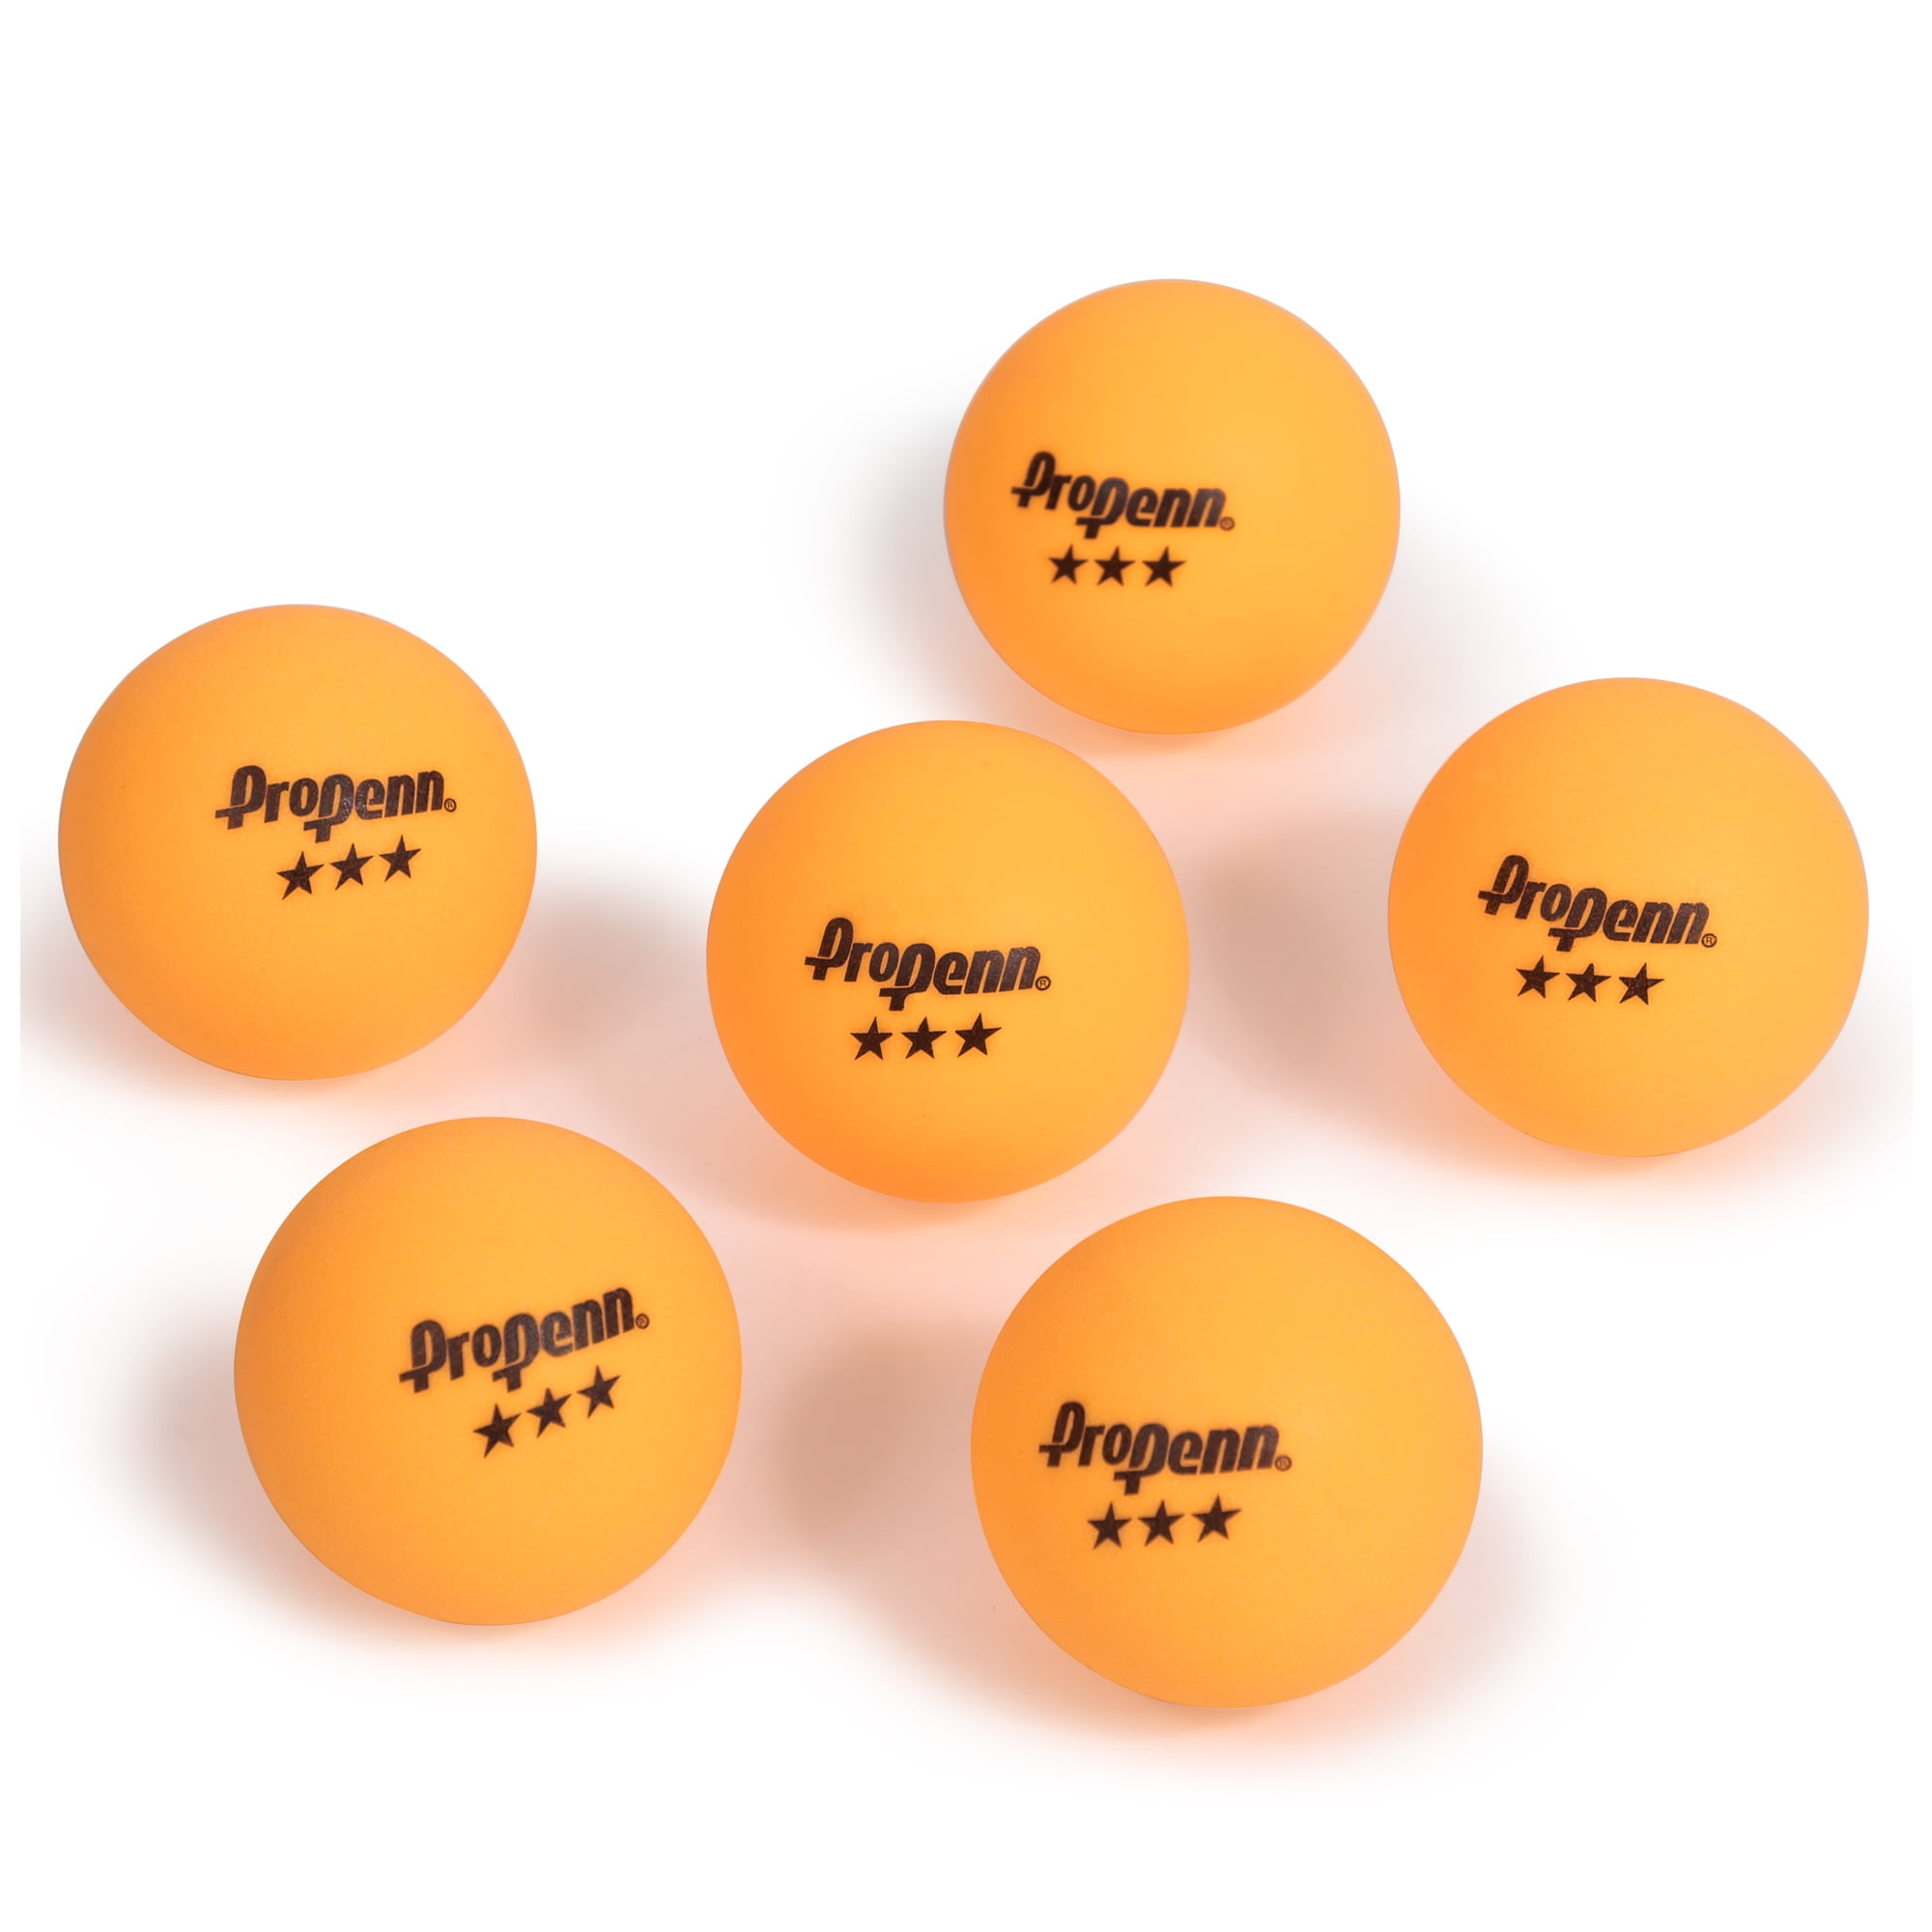 Pack of 6 3-Star PREMIUM 40+mm Table Tennis Balls Official Ball White